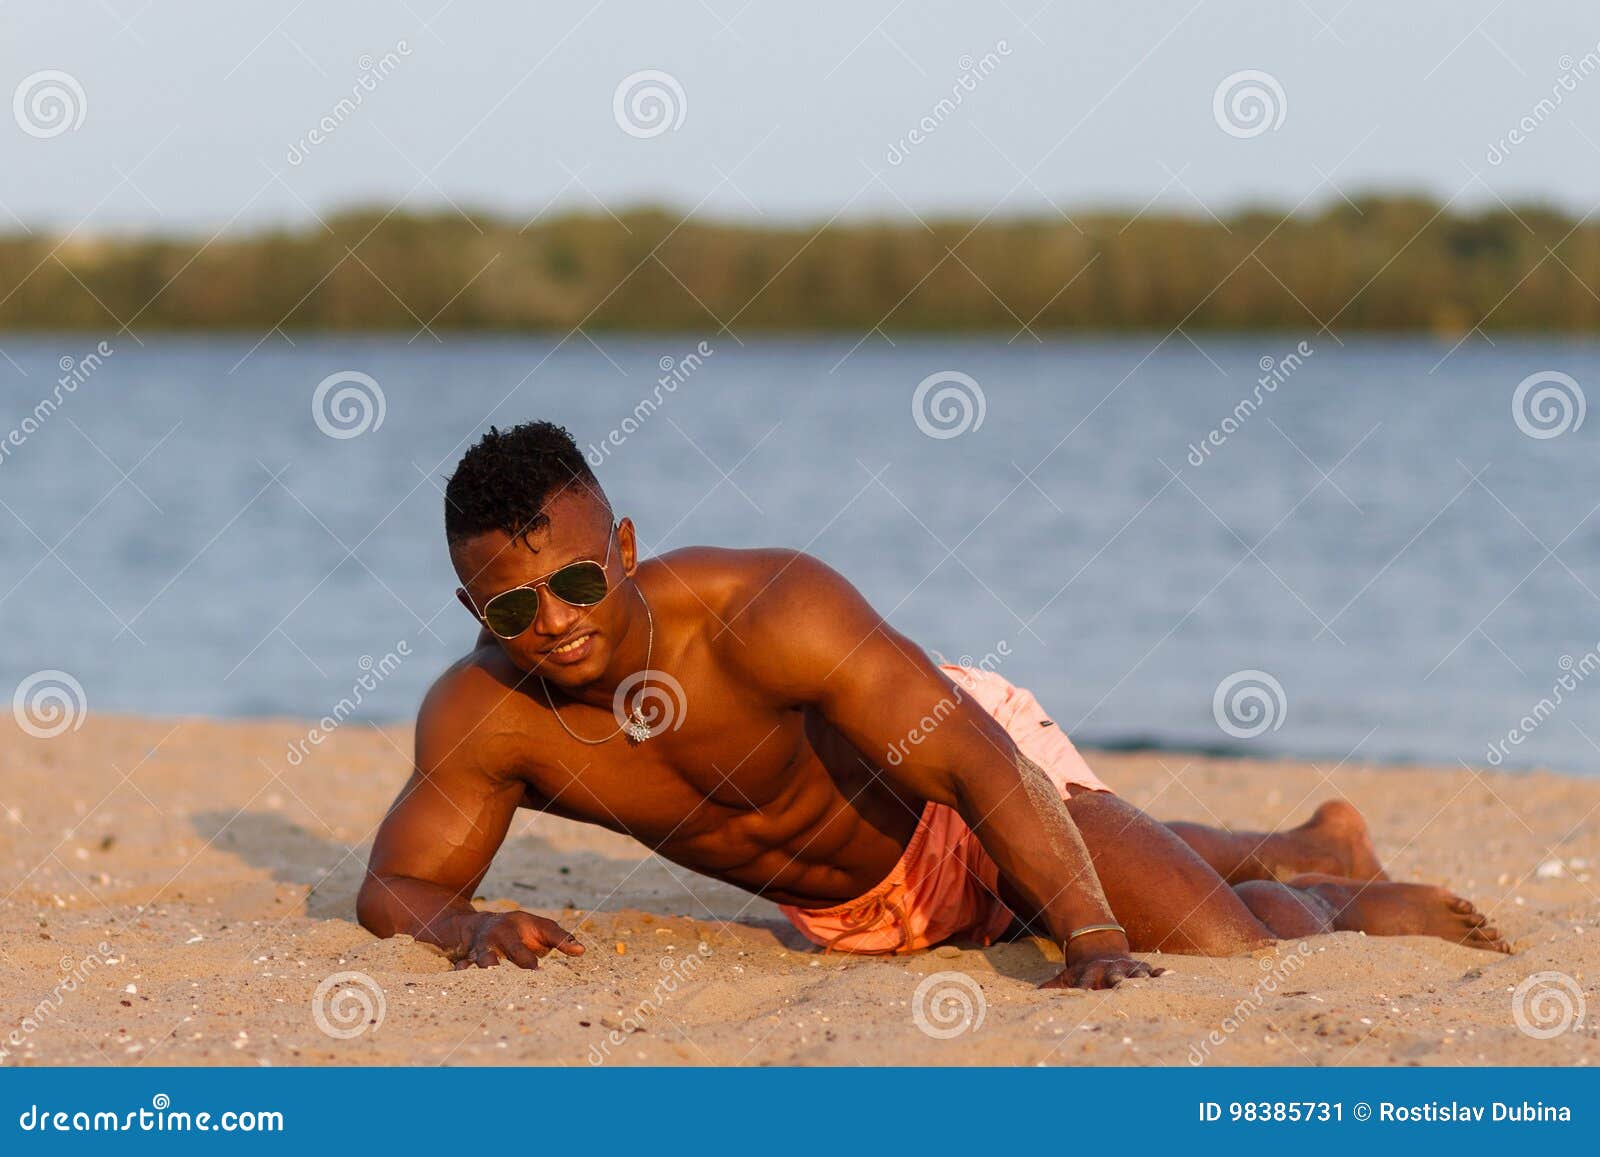 black muscle man on beach